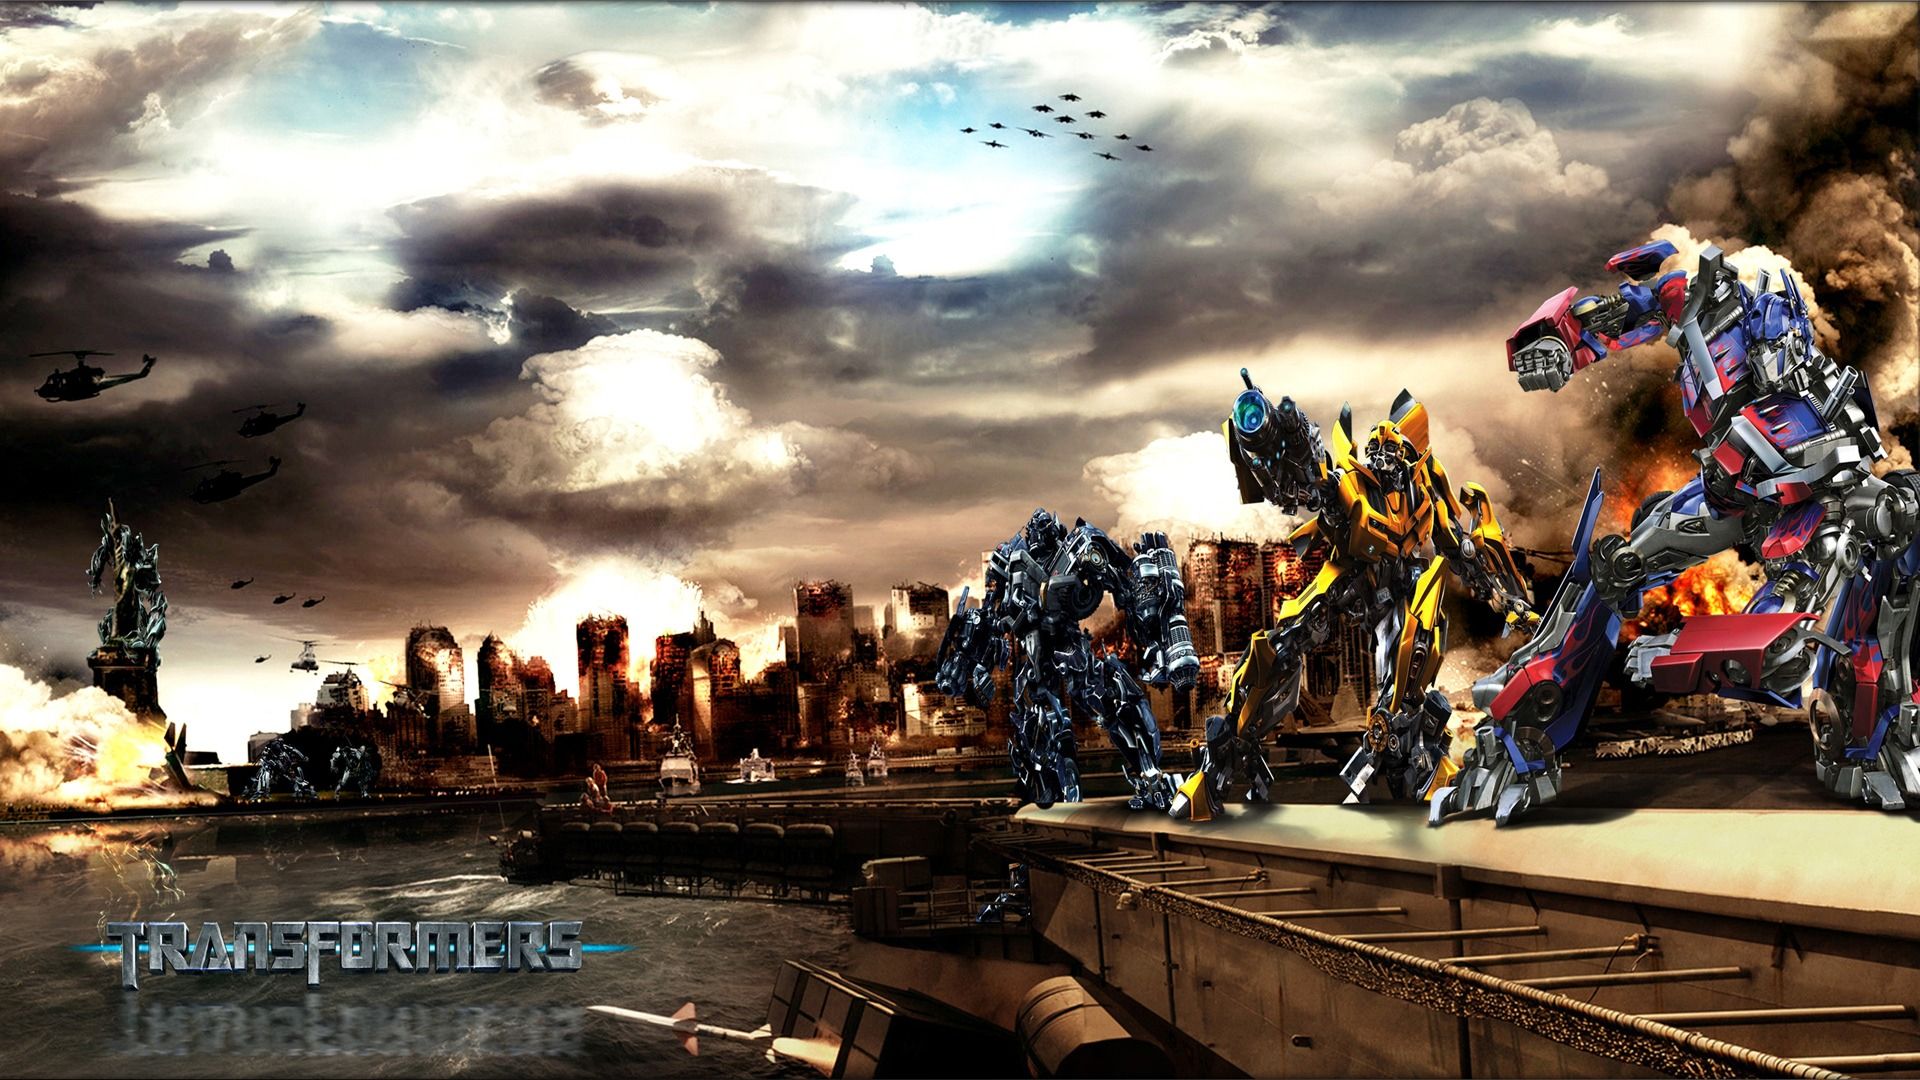 HD Transformers Wallpaper .wonderfulengineering.com